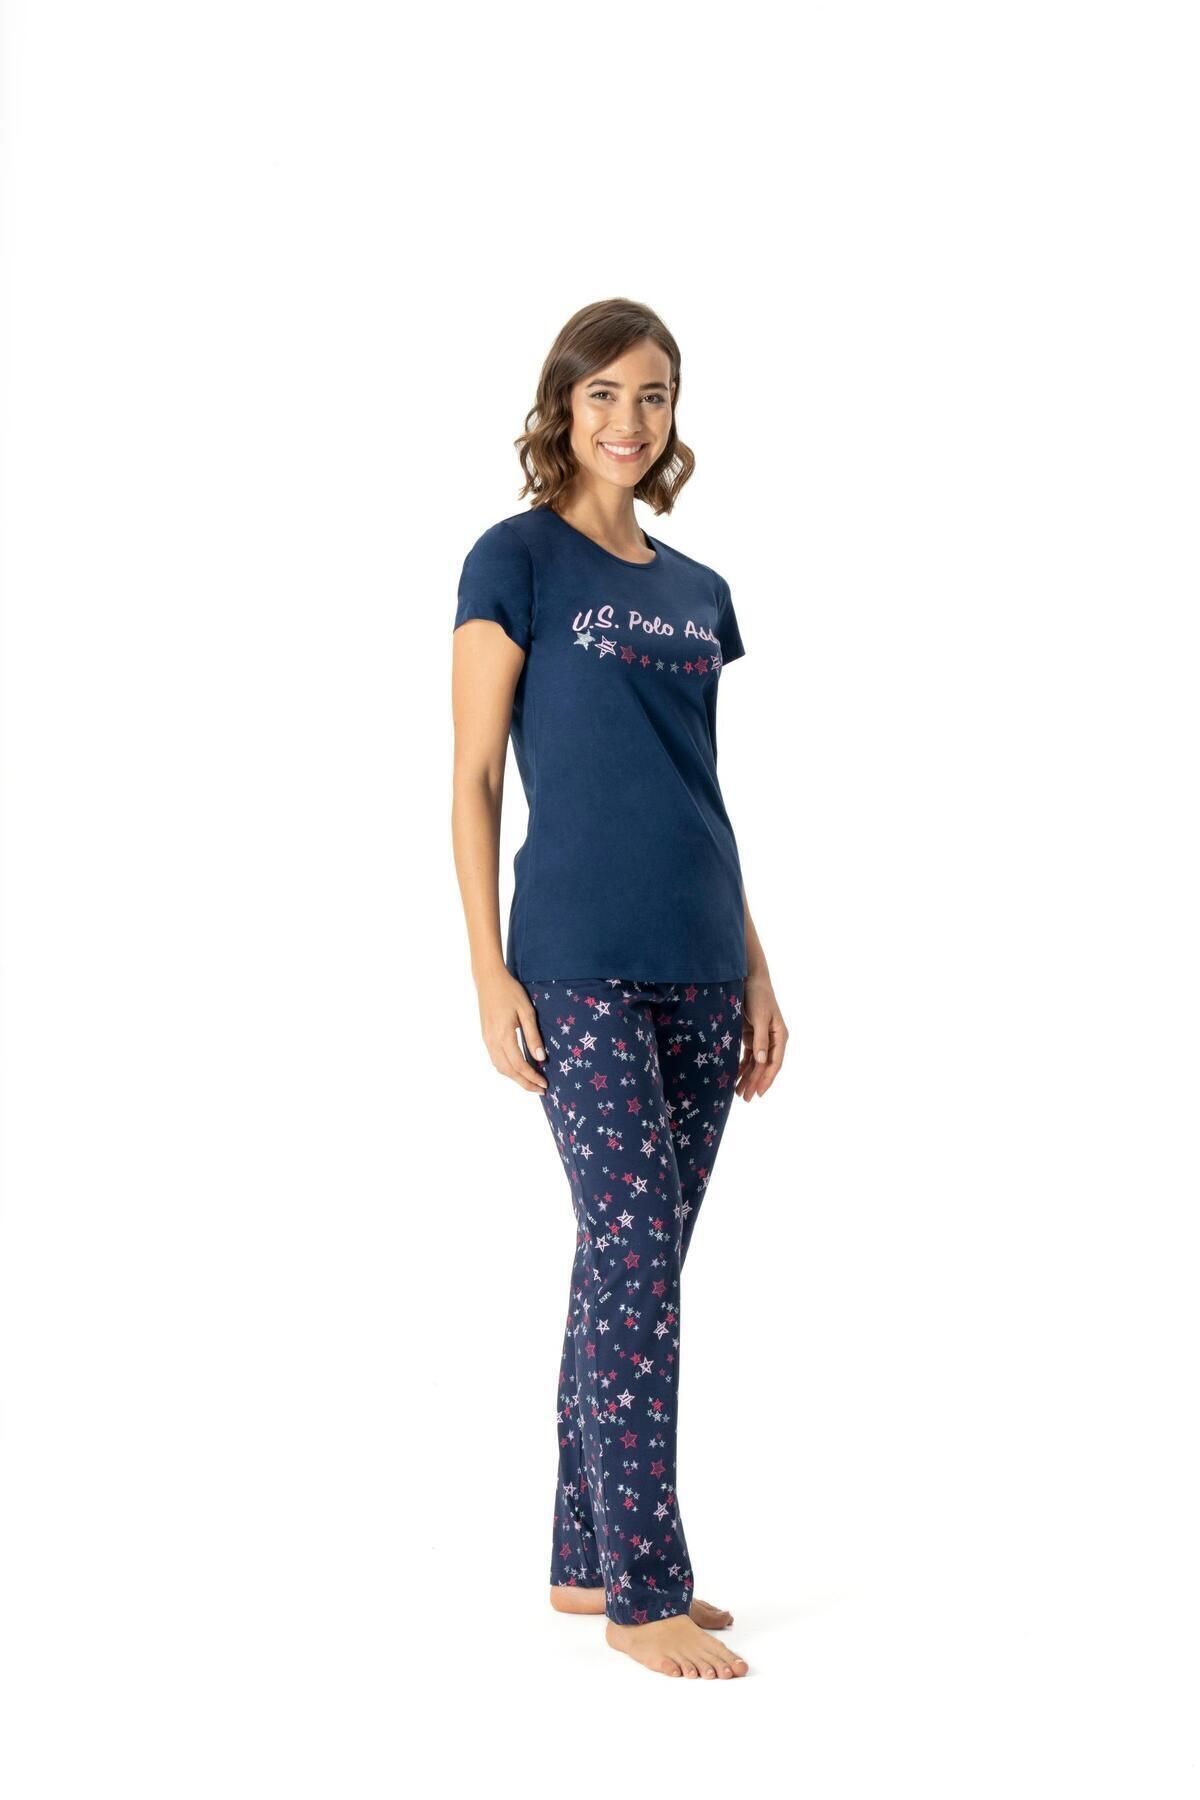 U.S. Polo Assn. U.S. Polo Assn. Kadın Lacivert %100 Pamuklu Pijama Takımı